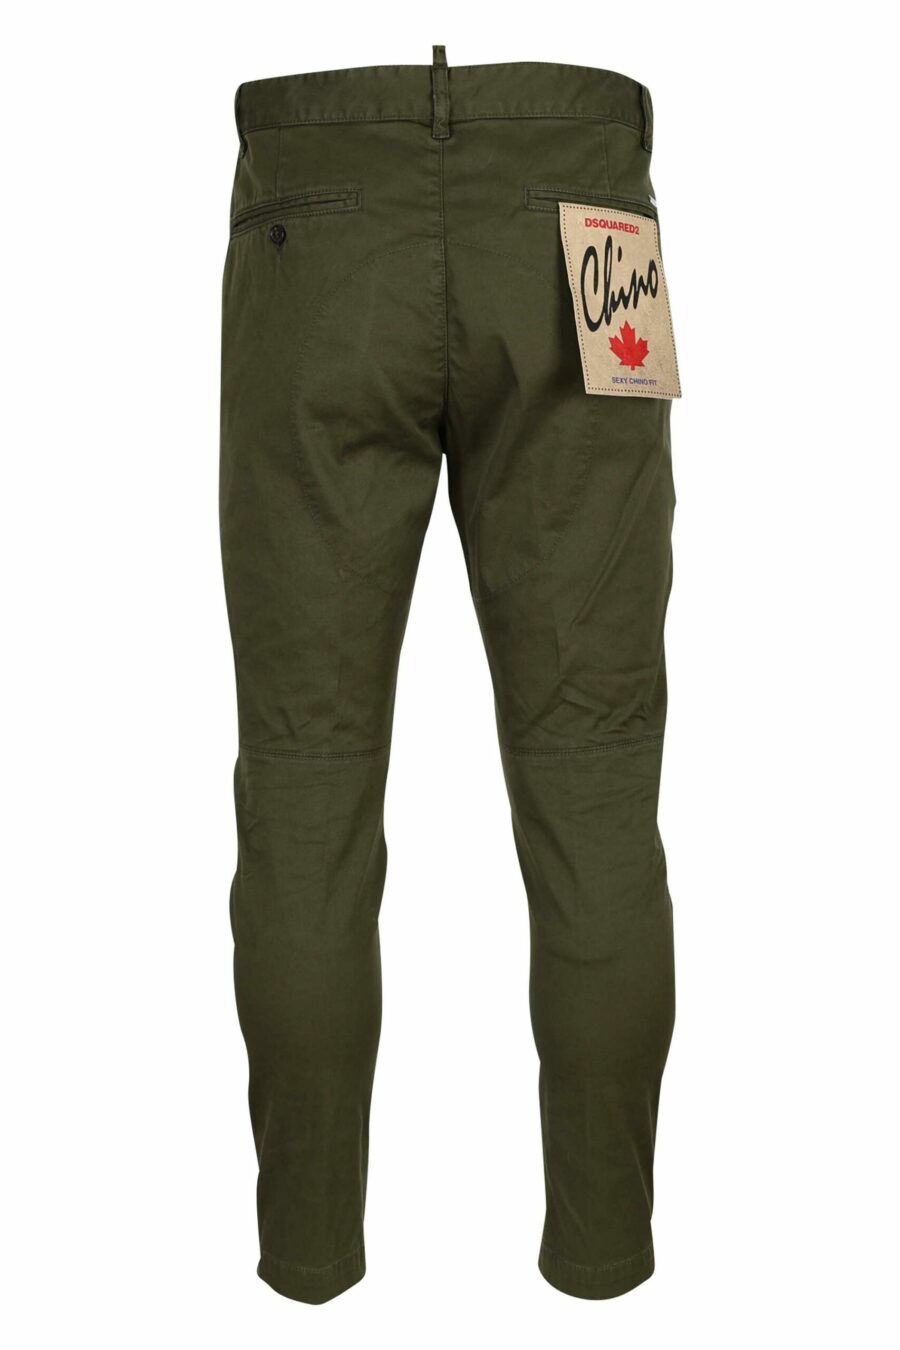 Pantalón verde militar "sexy chino" - 8054148321741 2 scaled